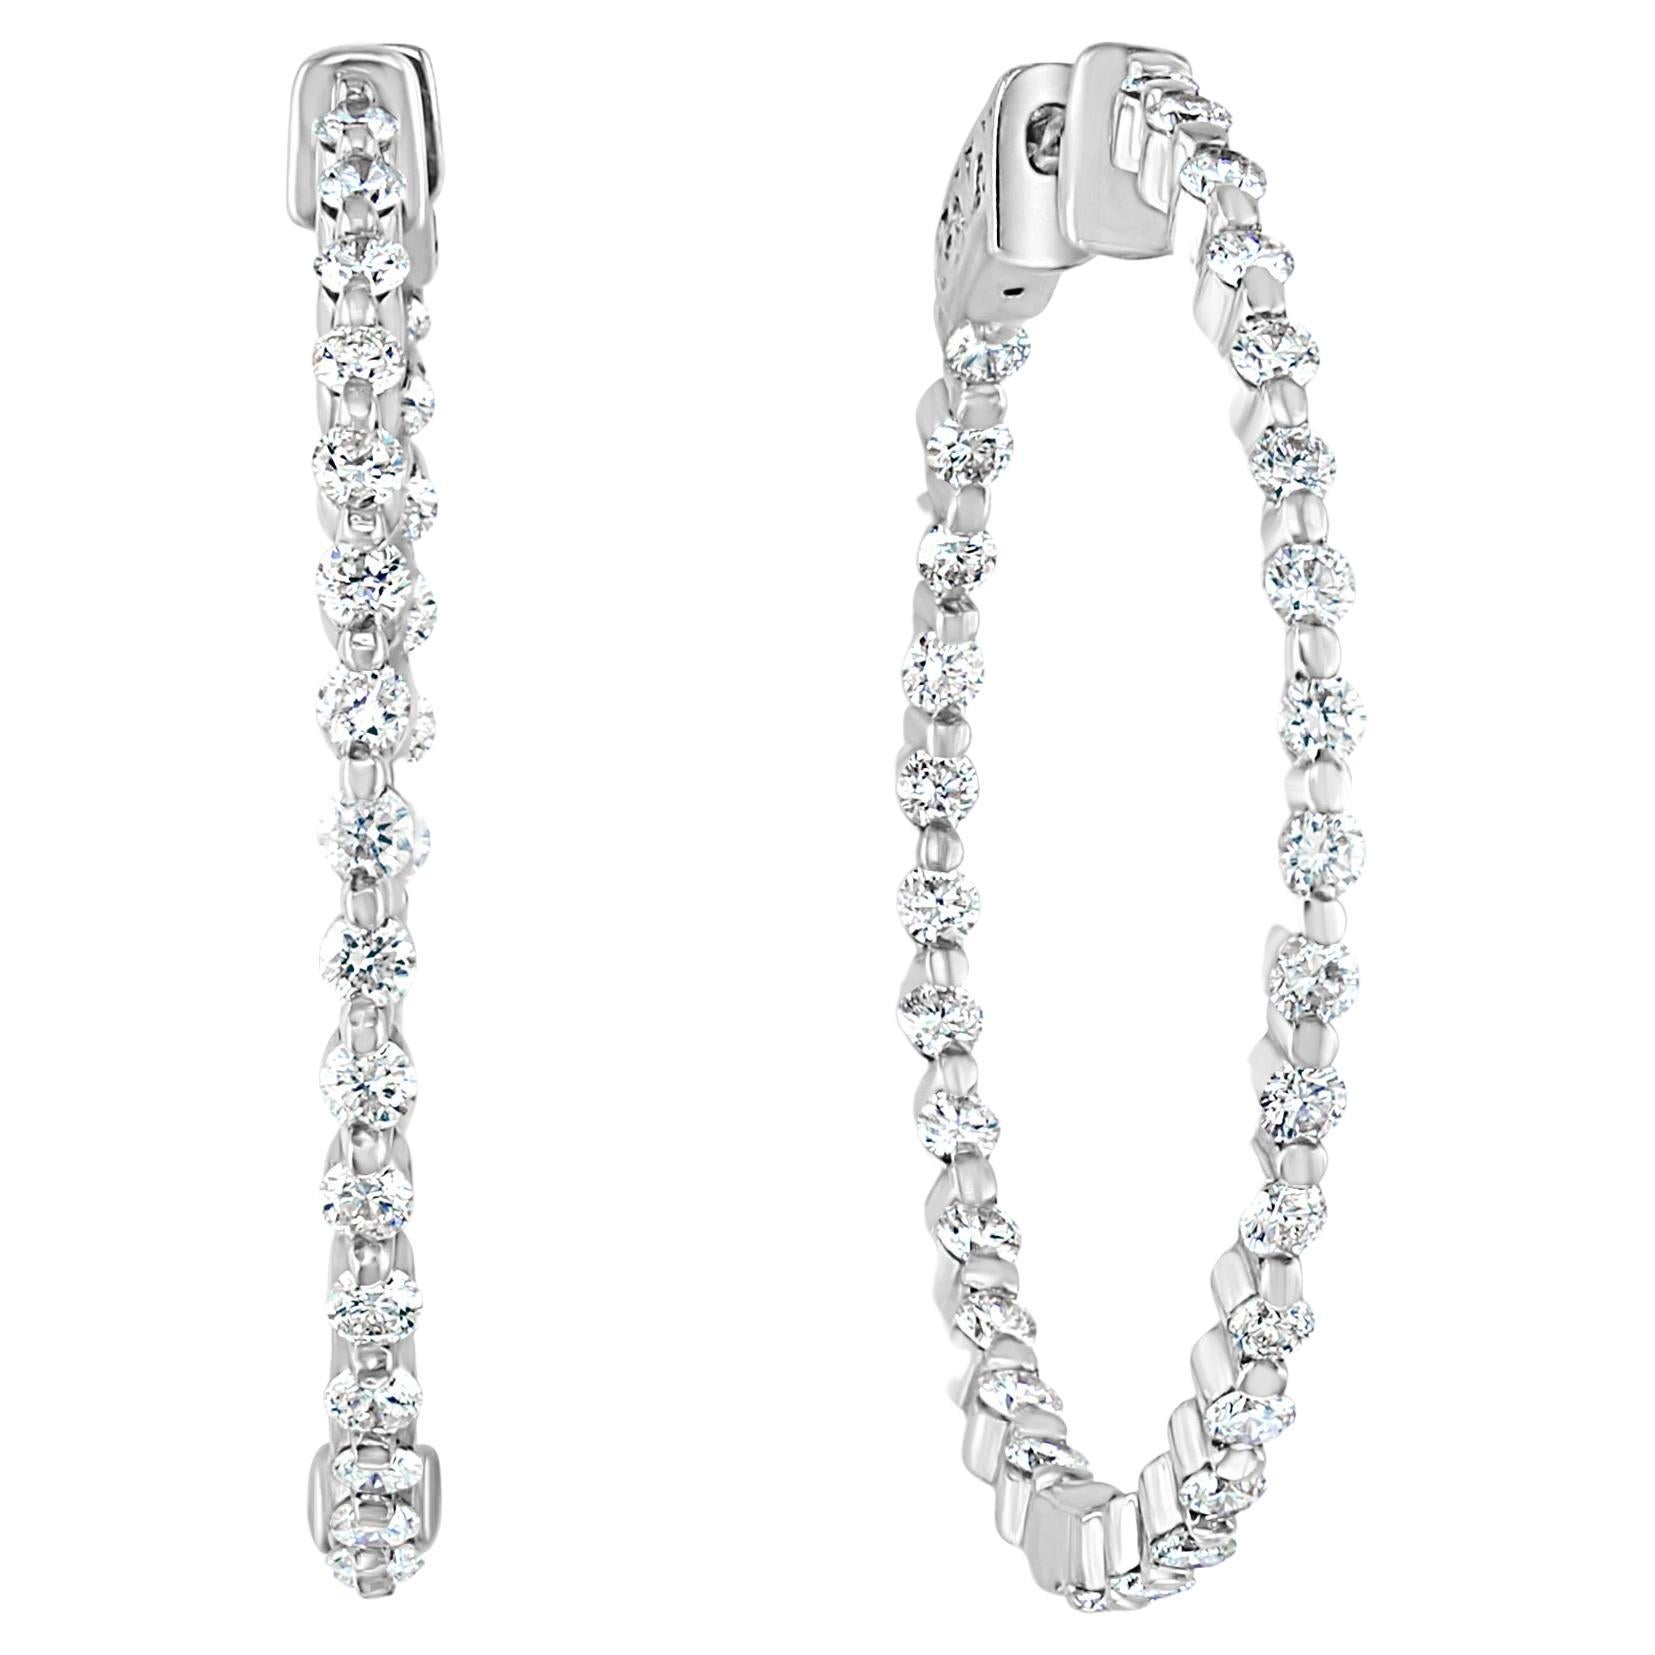 2.05 Carat Brilliant Cut Round Diamond Hoop Earrings in 14K White Gold For Sale